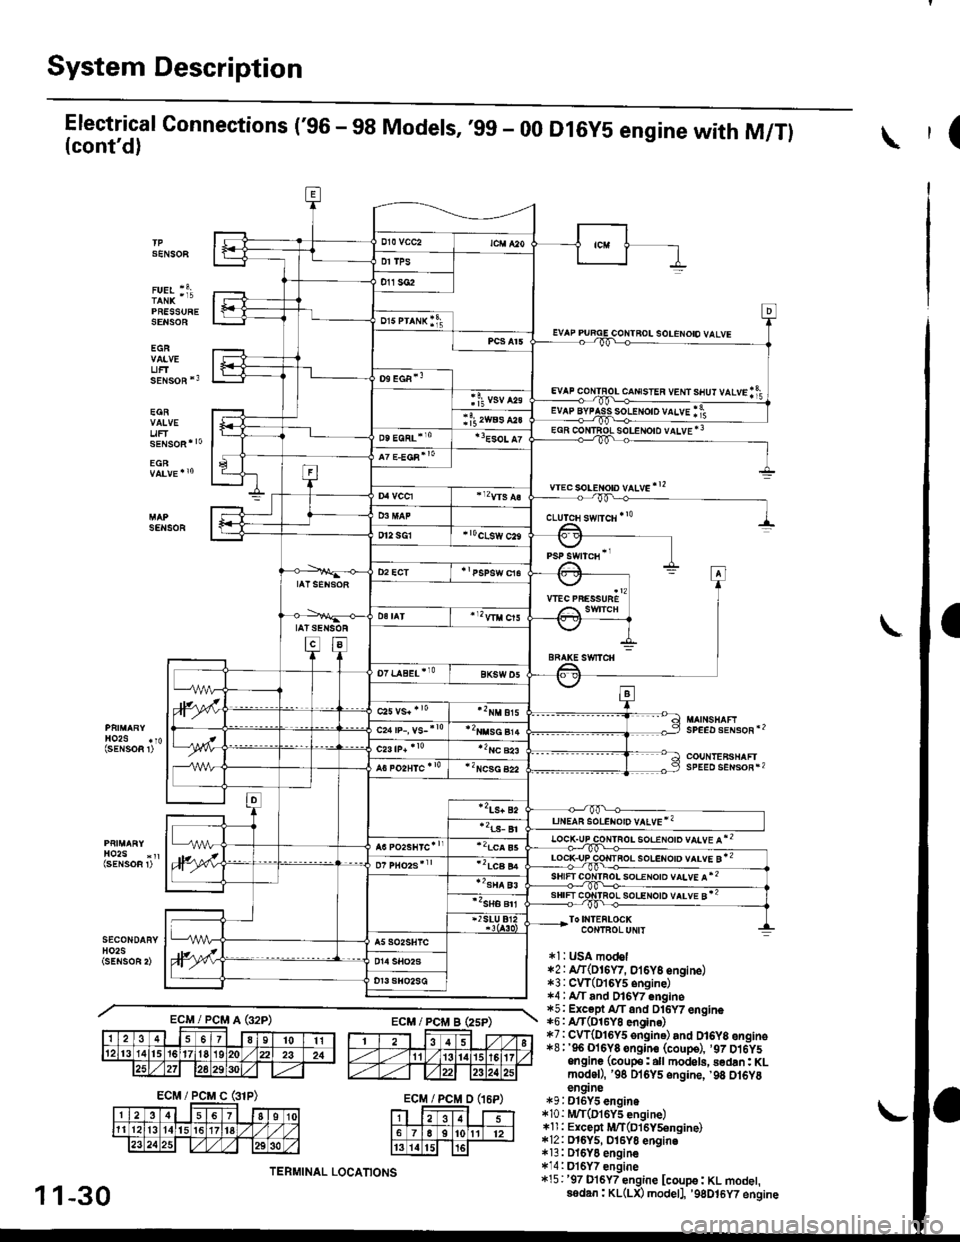 HONDA CIVIC 1996 6.G Owners Guide System Description
Electrical Connections (96 - 98 Models, ,99 - 00(contd)
PRESSURESENSOE
EGR
UFTsENsoR *3
EGR
uF
D16Y5 engine with M/Tl(
SENSOF
solENoto vALvE *3
wec soLeton vltve!2
SENSOR
SPEED s